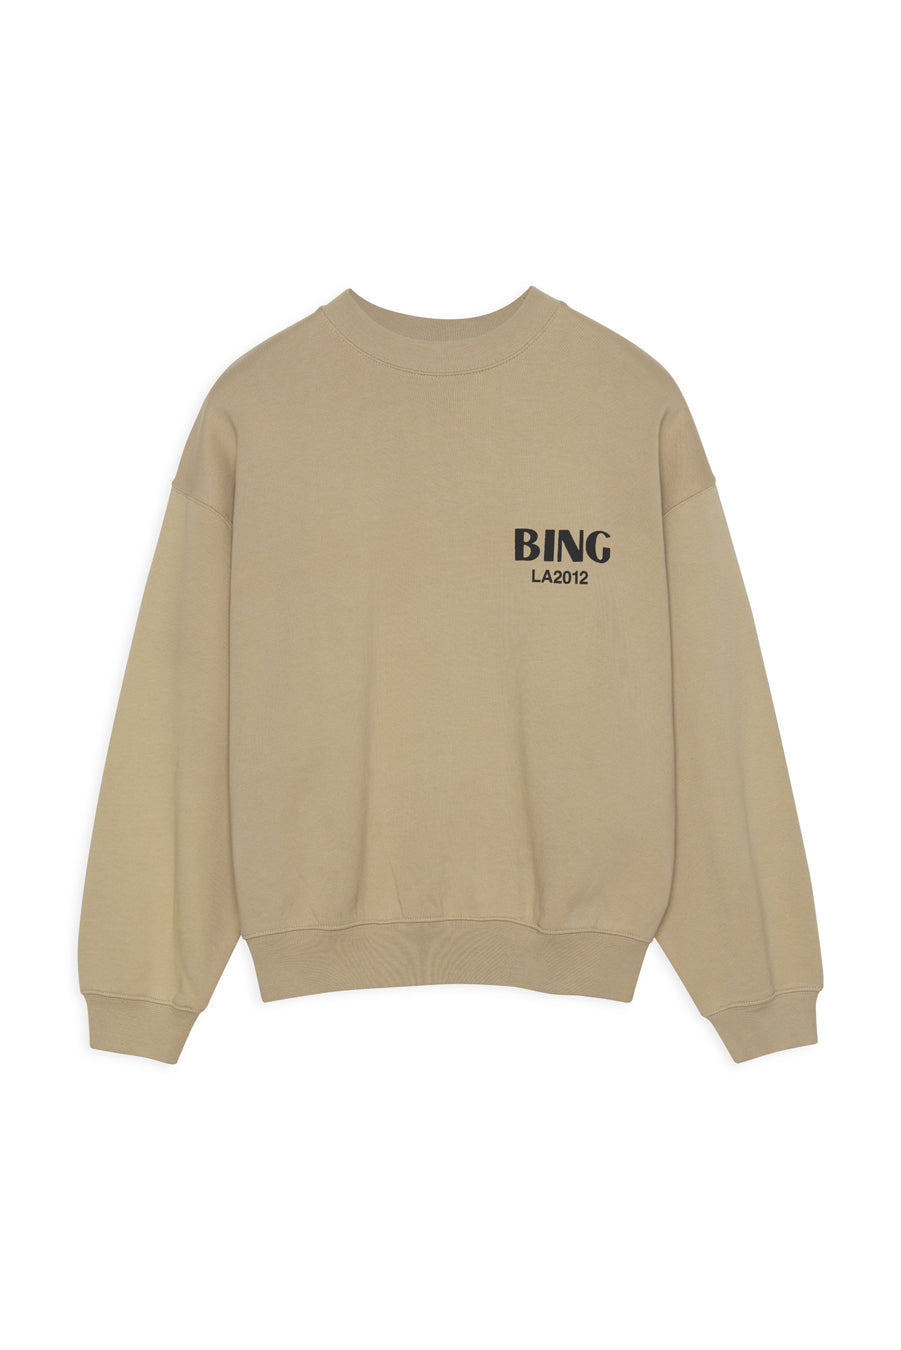 Anine Bing - Jaci Sweatshirt Bing LA in Sand